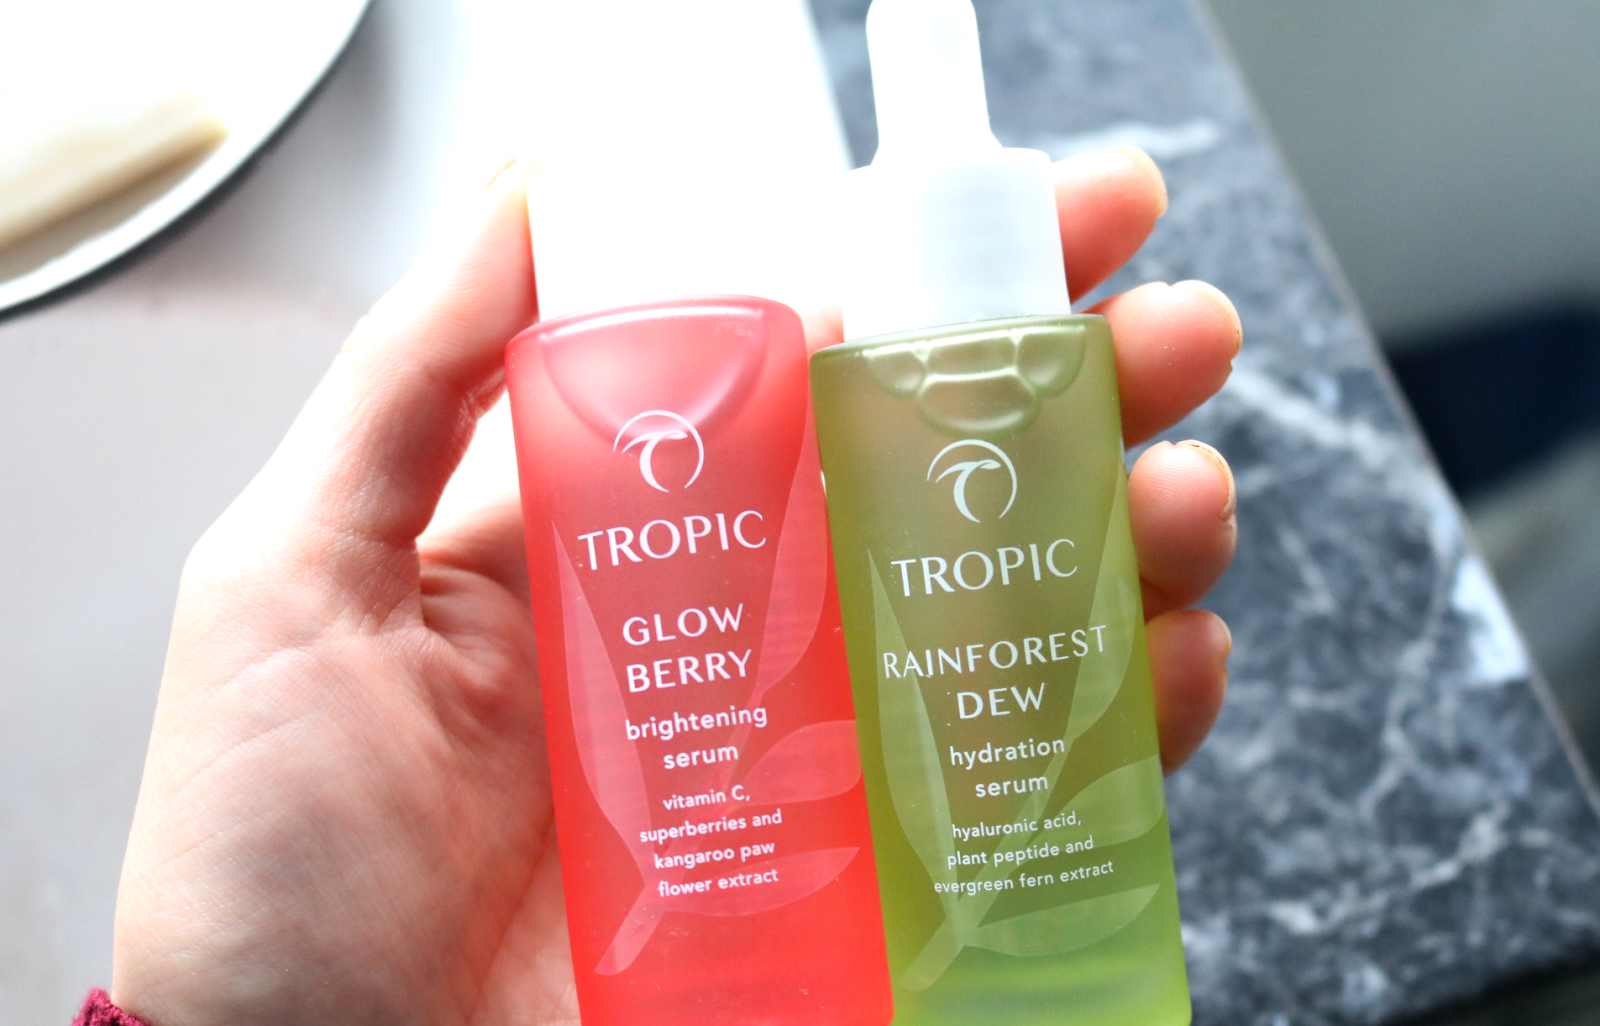 Tropic Glow Berry Brightening Serum and Rainforest Dew Serum review